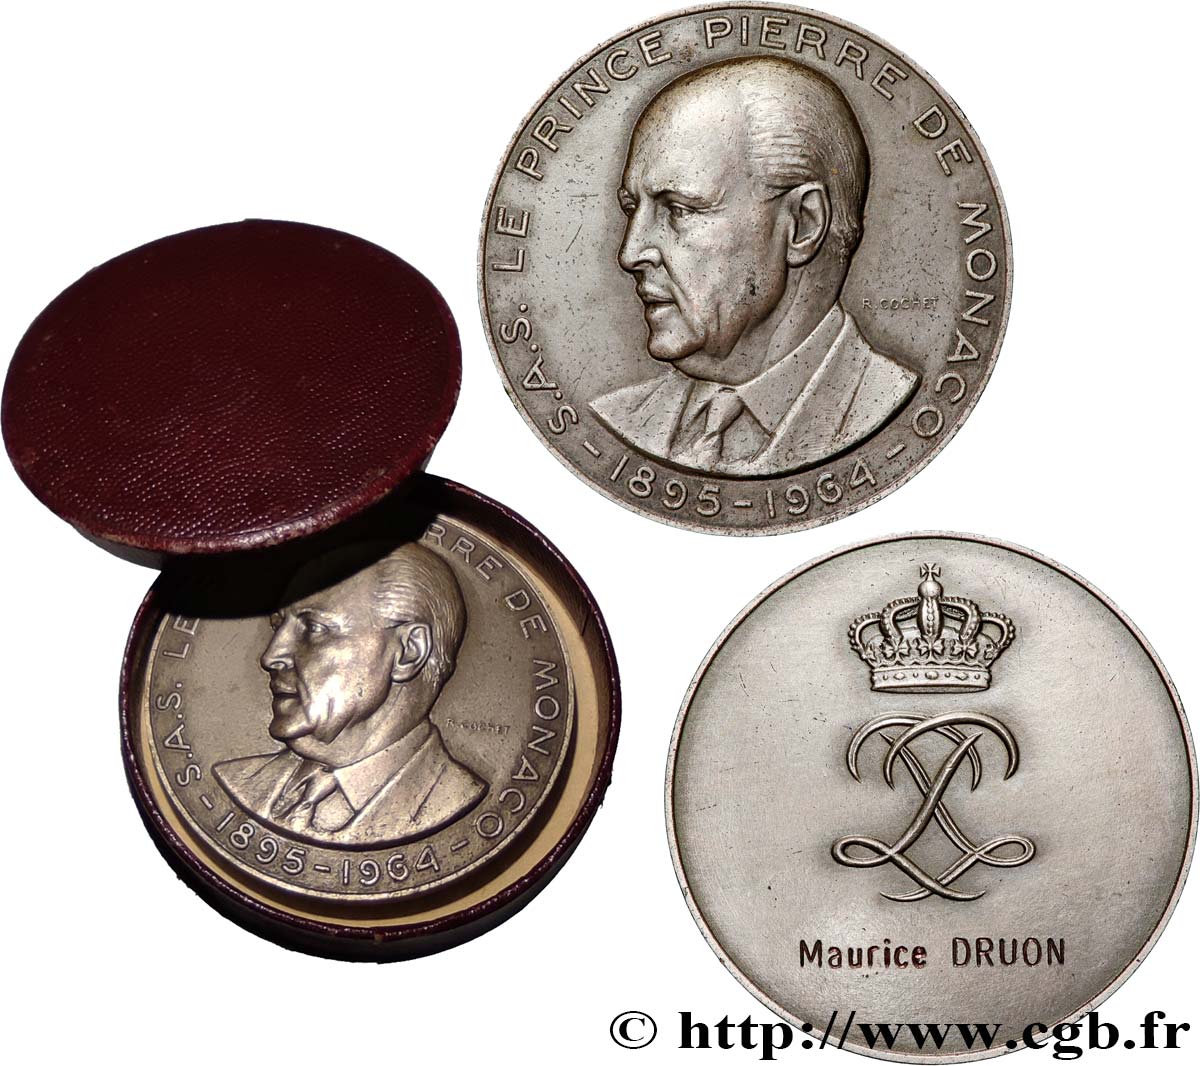 MONACO - PRINCIPATO DI MONACO - RANIERI III Médaille, Prince Pierre de Monaco q.SPL